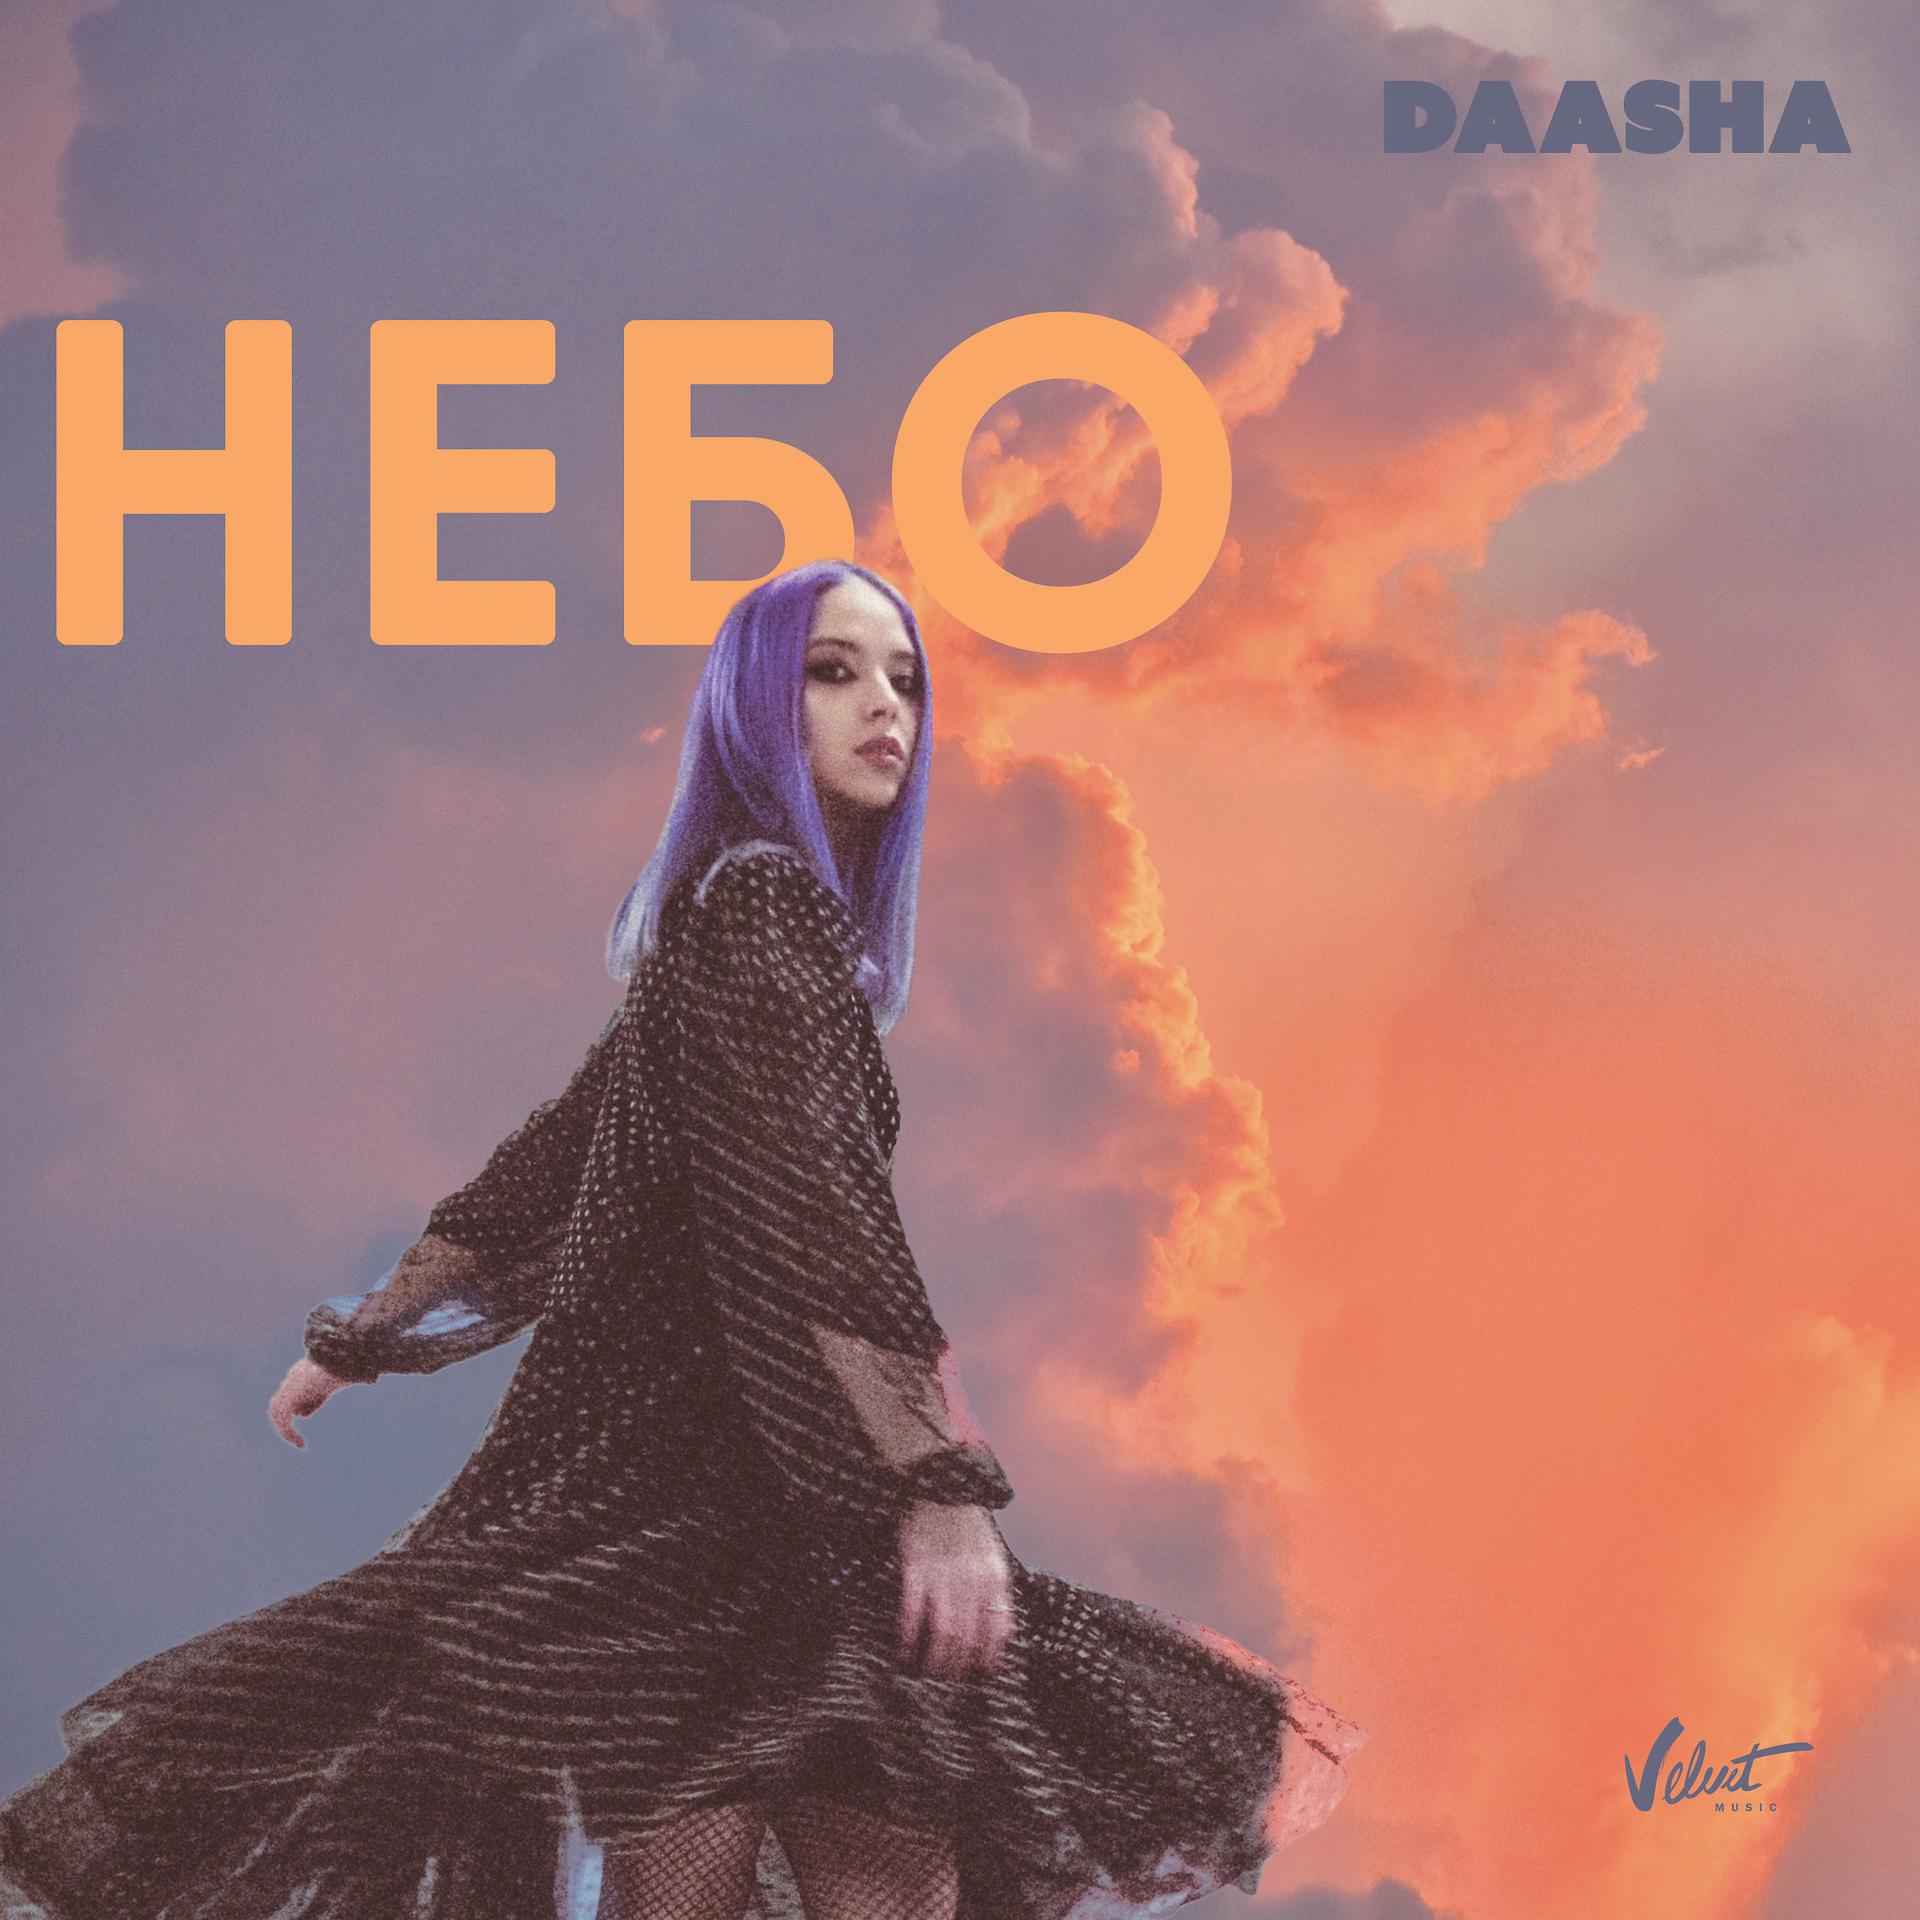 Постер к треку DAASHA - Небо